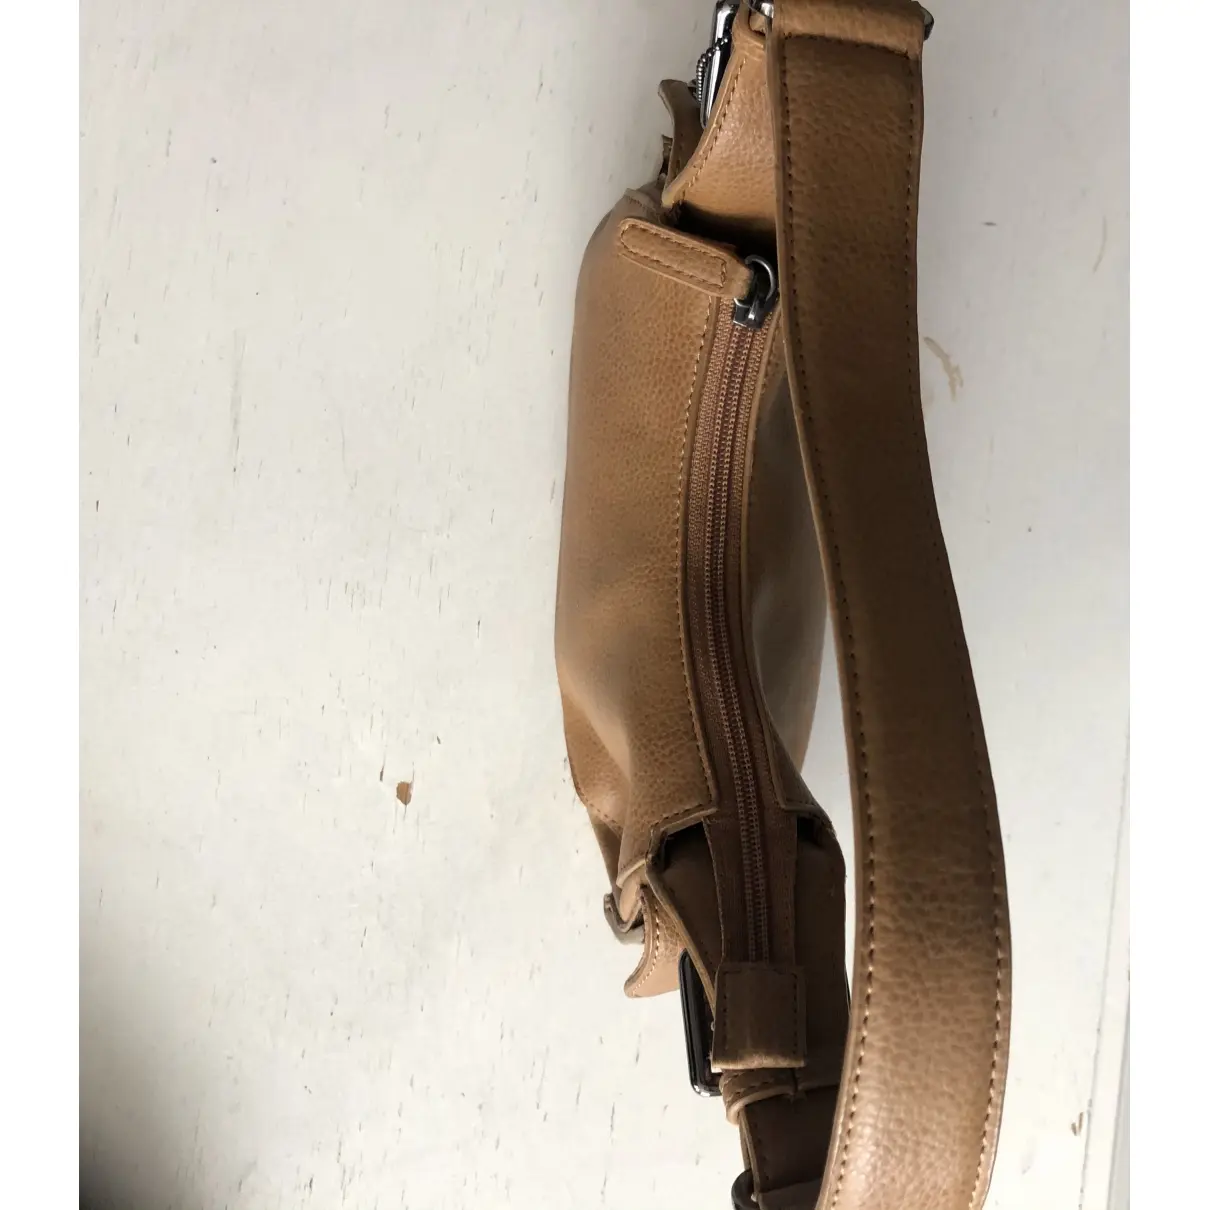 Buy ESPRIT Leather mini bag online